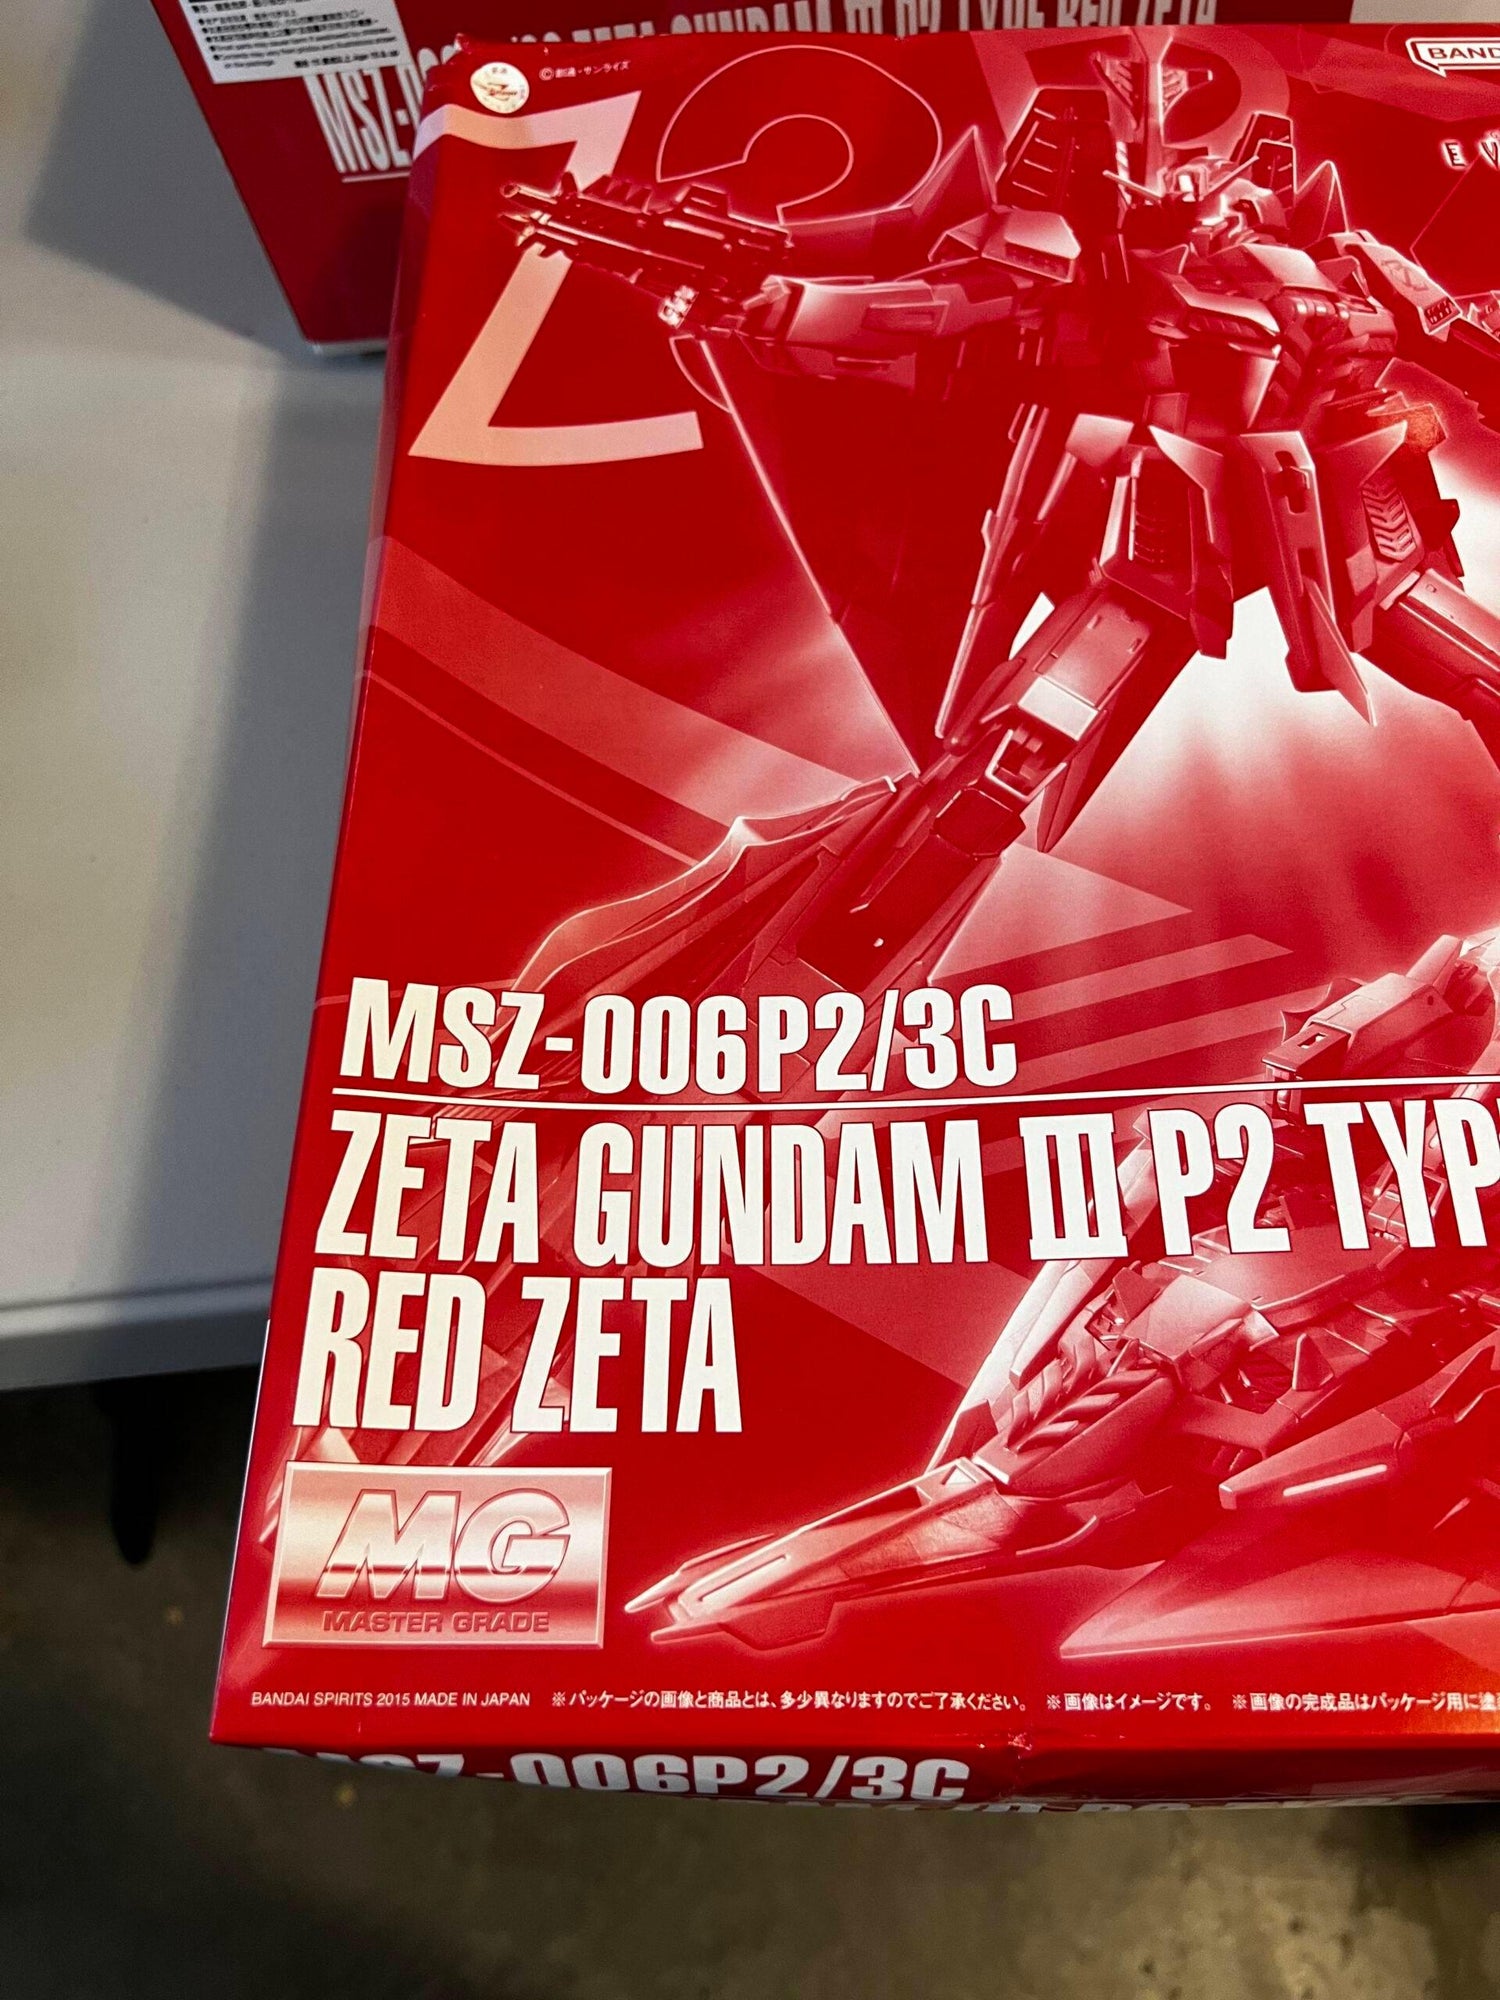 Zeta Gundam III P2 Type Red Zeta